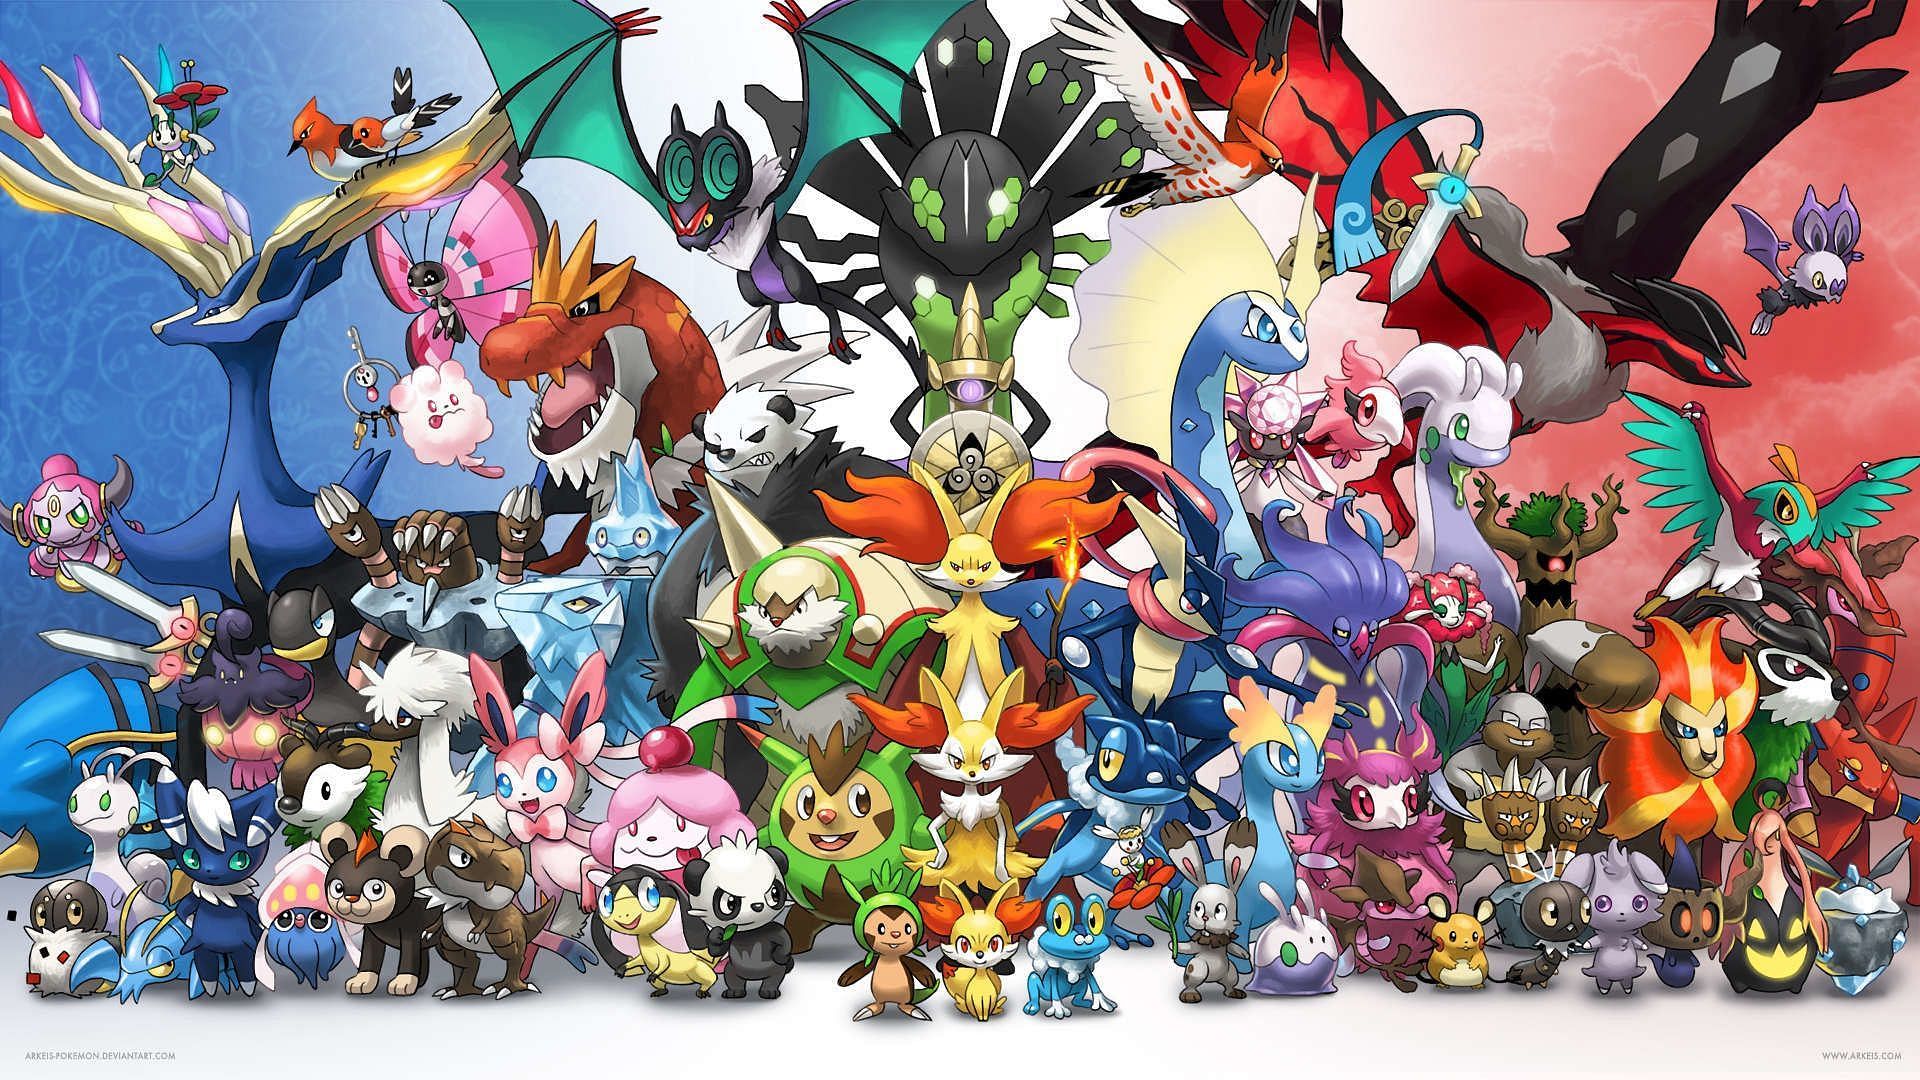 Pokemon Universe, Image via Wallpaperaccess.com